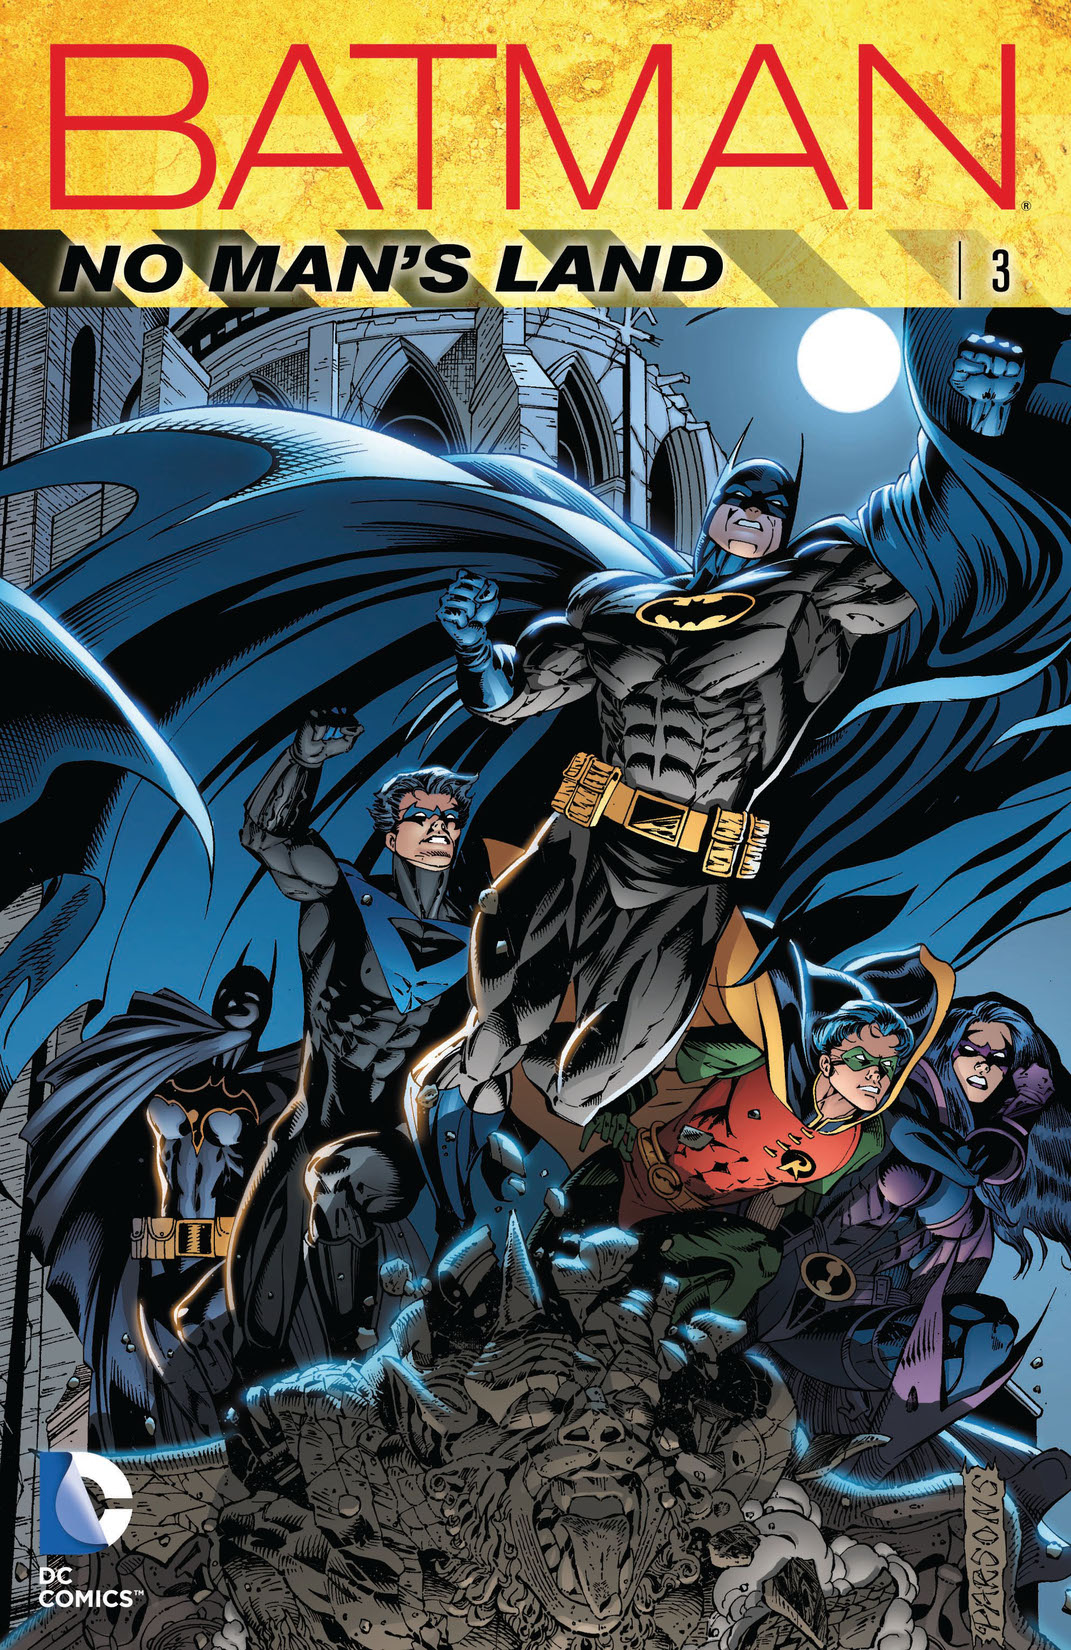 Batman: No Man's Land Vol. 3 preview images